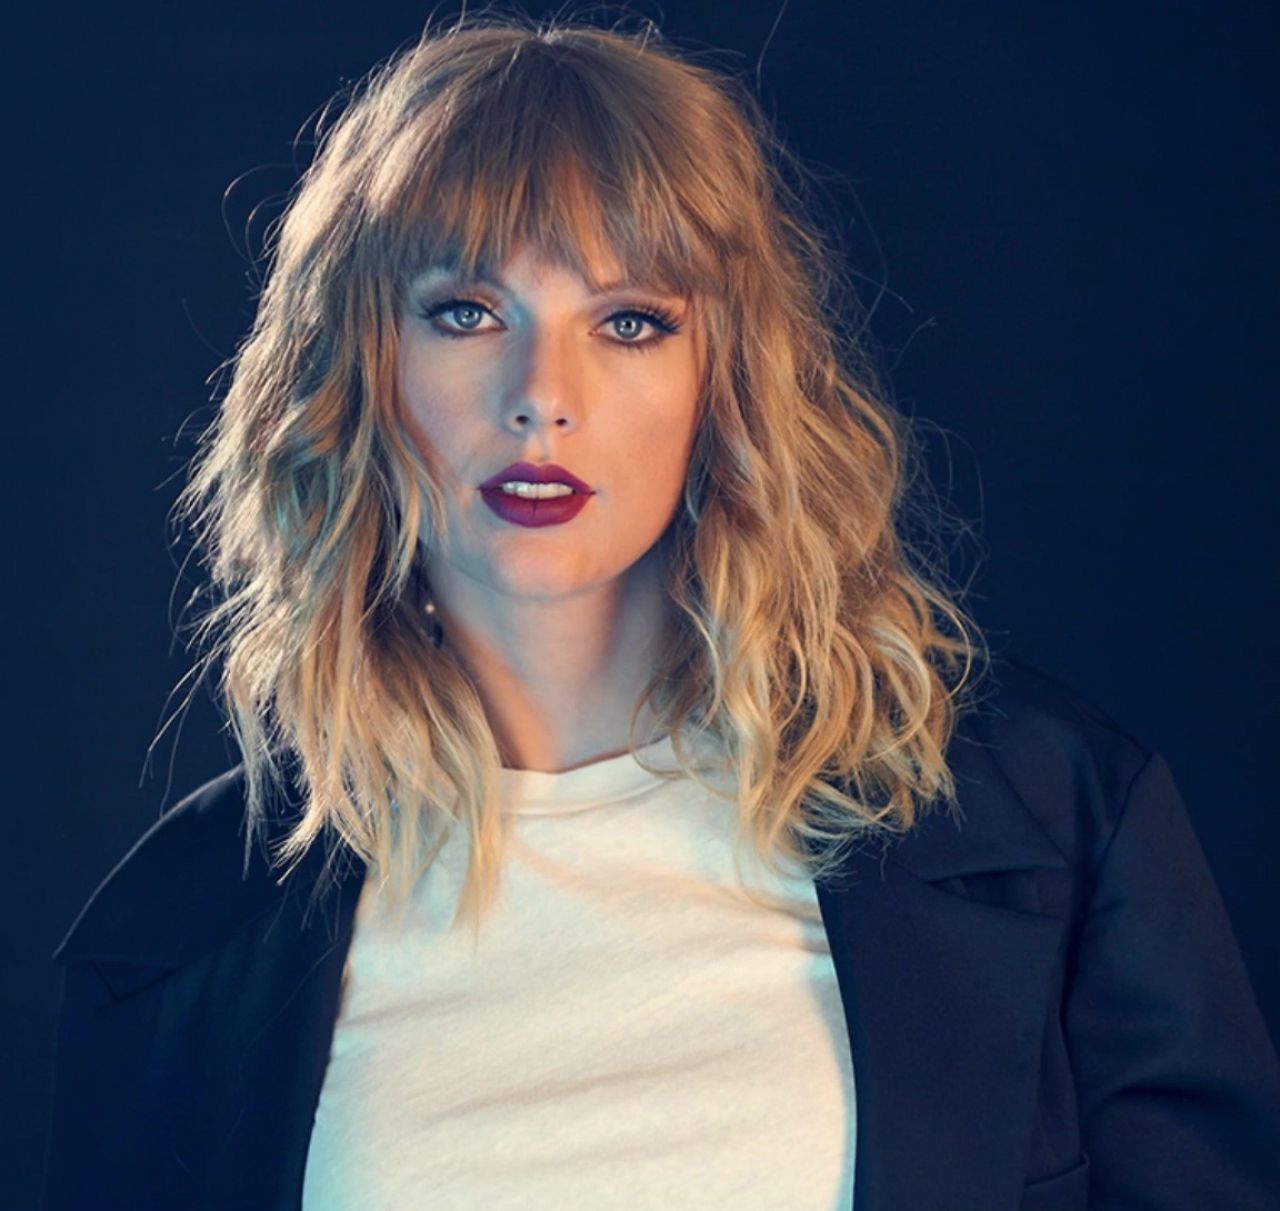 Taylor Swift - Headshot 20171280 x 1211